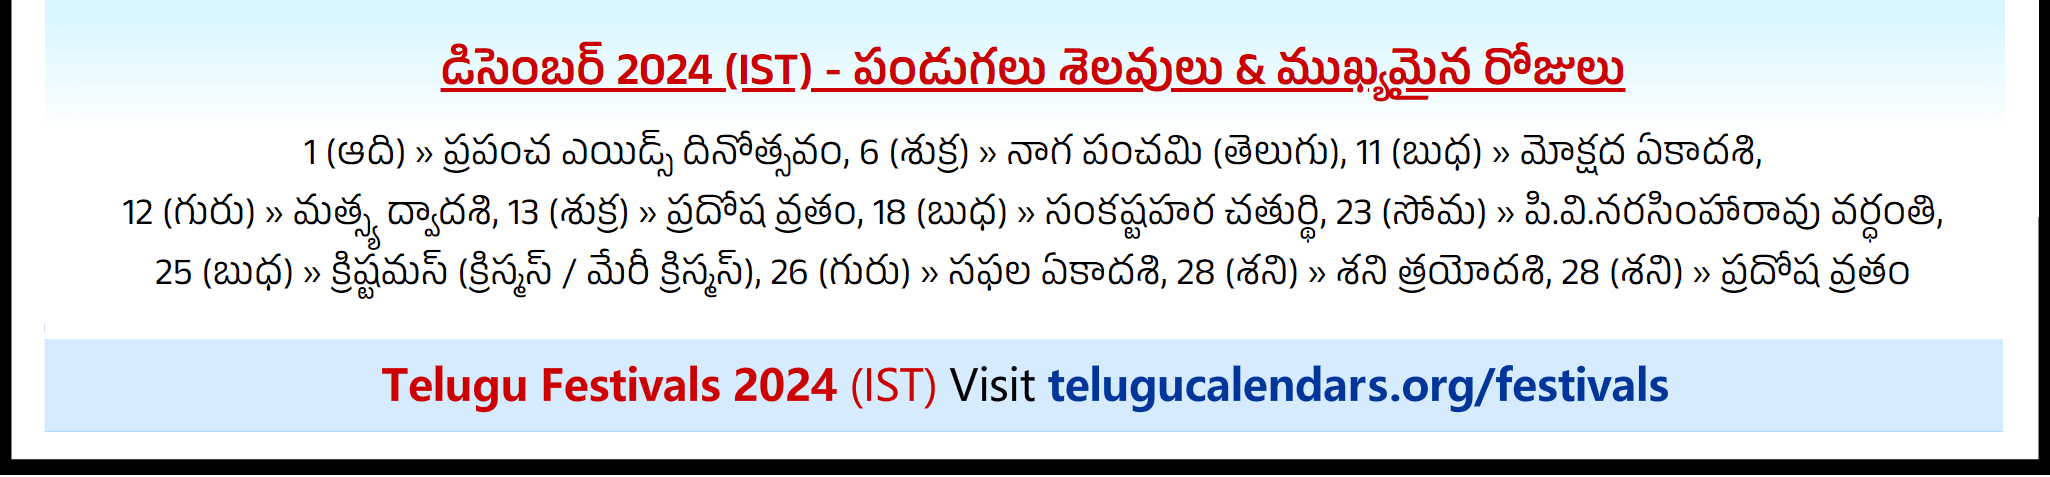 Telugu Festivals 2024 December Sydney